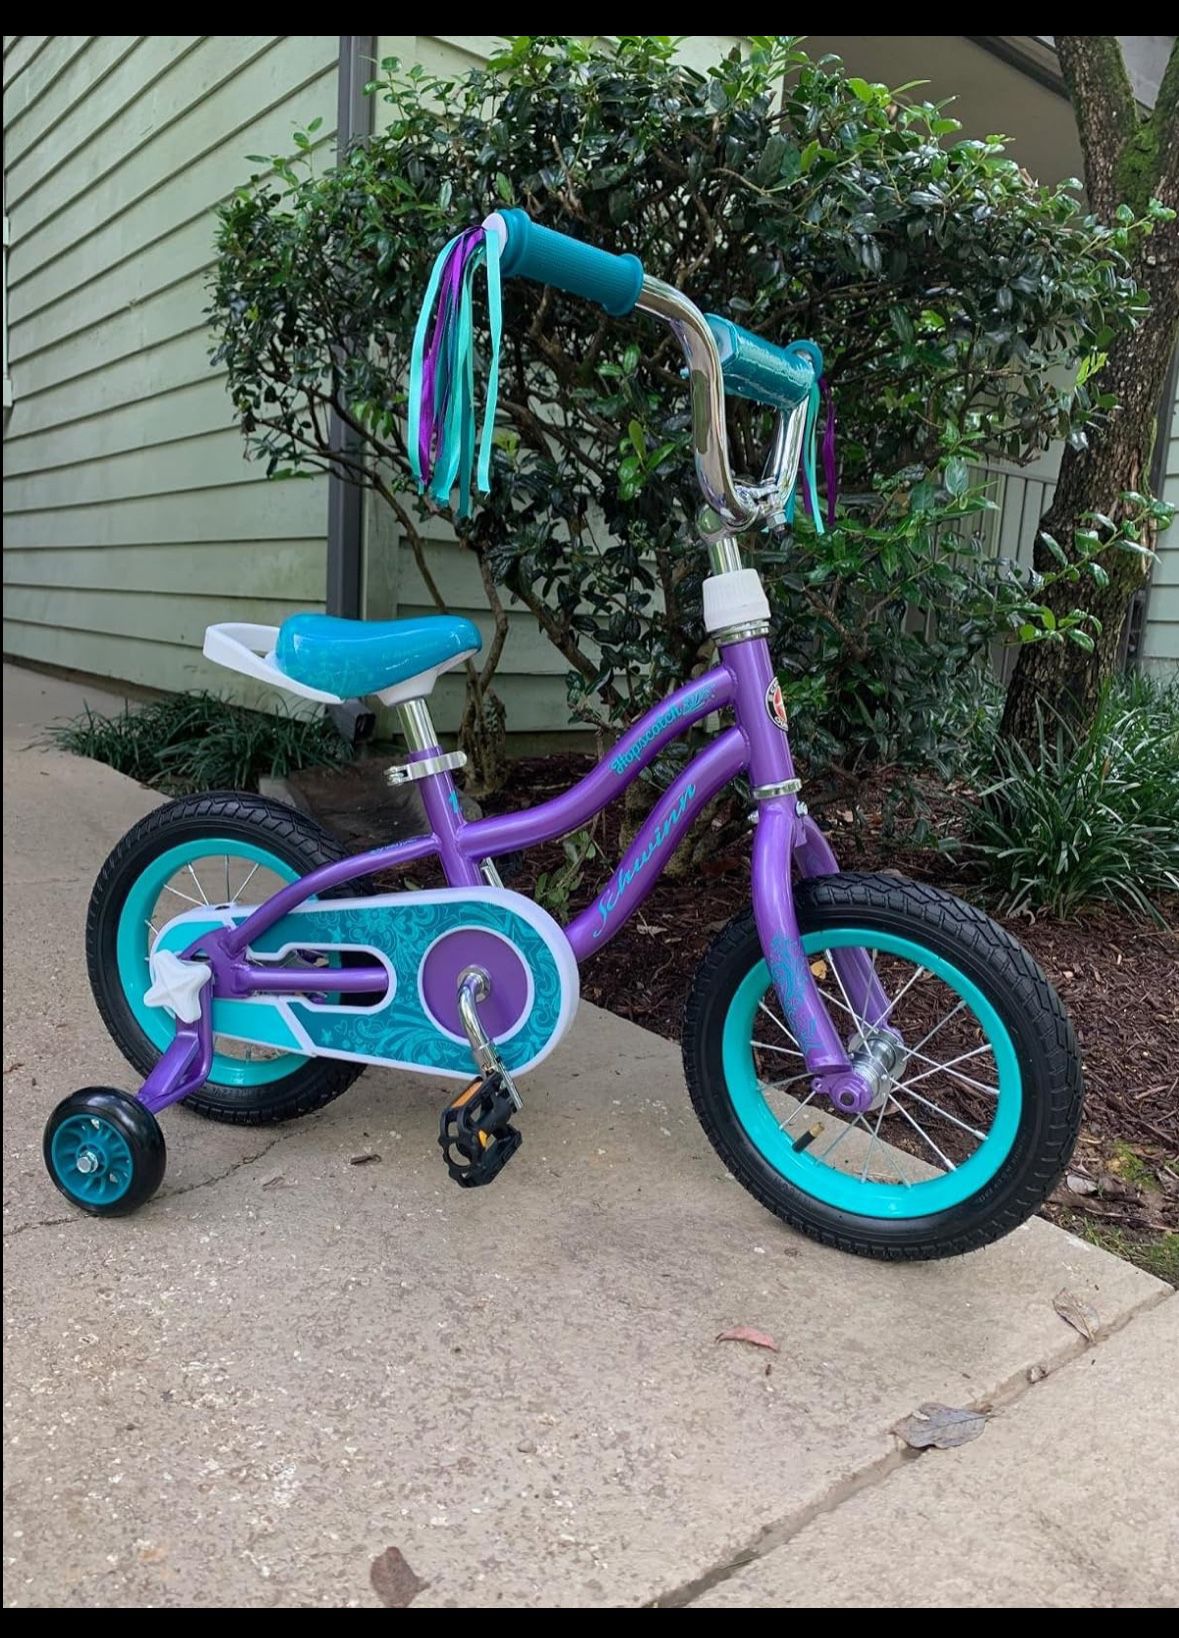 Schwinn Hopscotch Quick Build Kids' Girls' 12-in. Bike, Purple, Ages 1-4